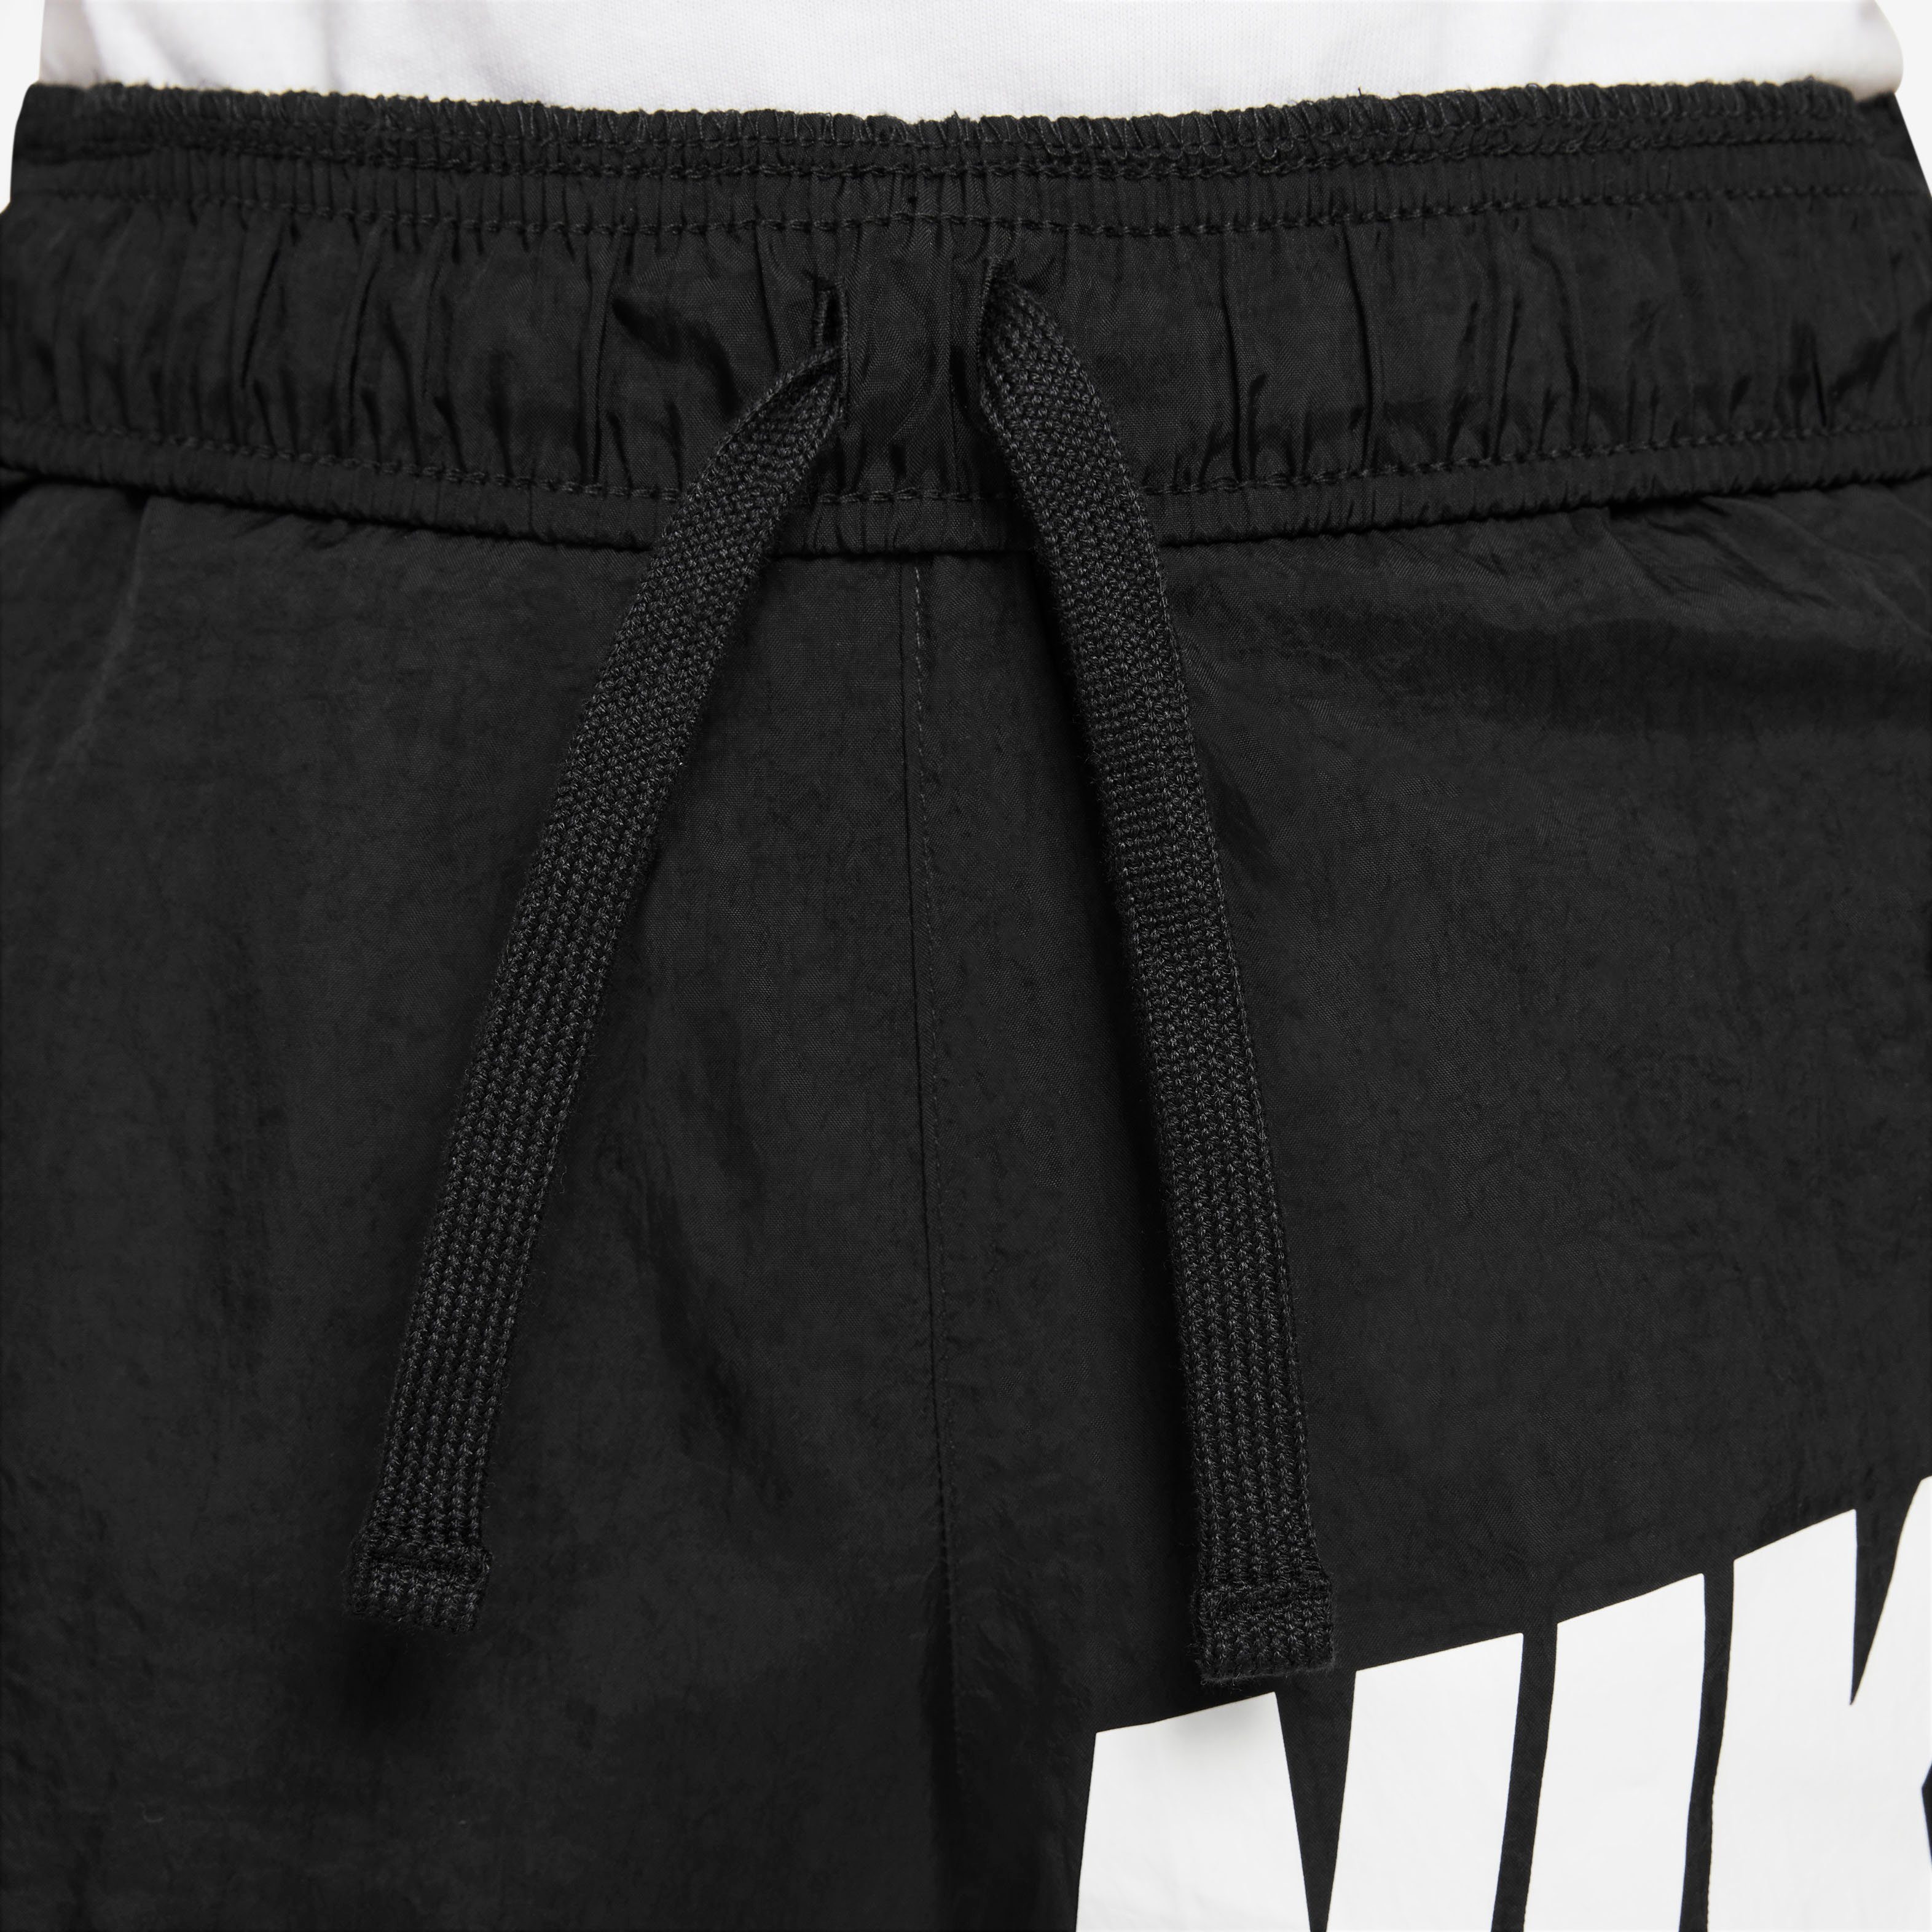 Shorts Shorts schwarz Nike Kids' Big (Boys) Woven Sportswear